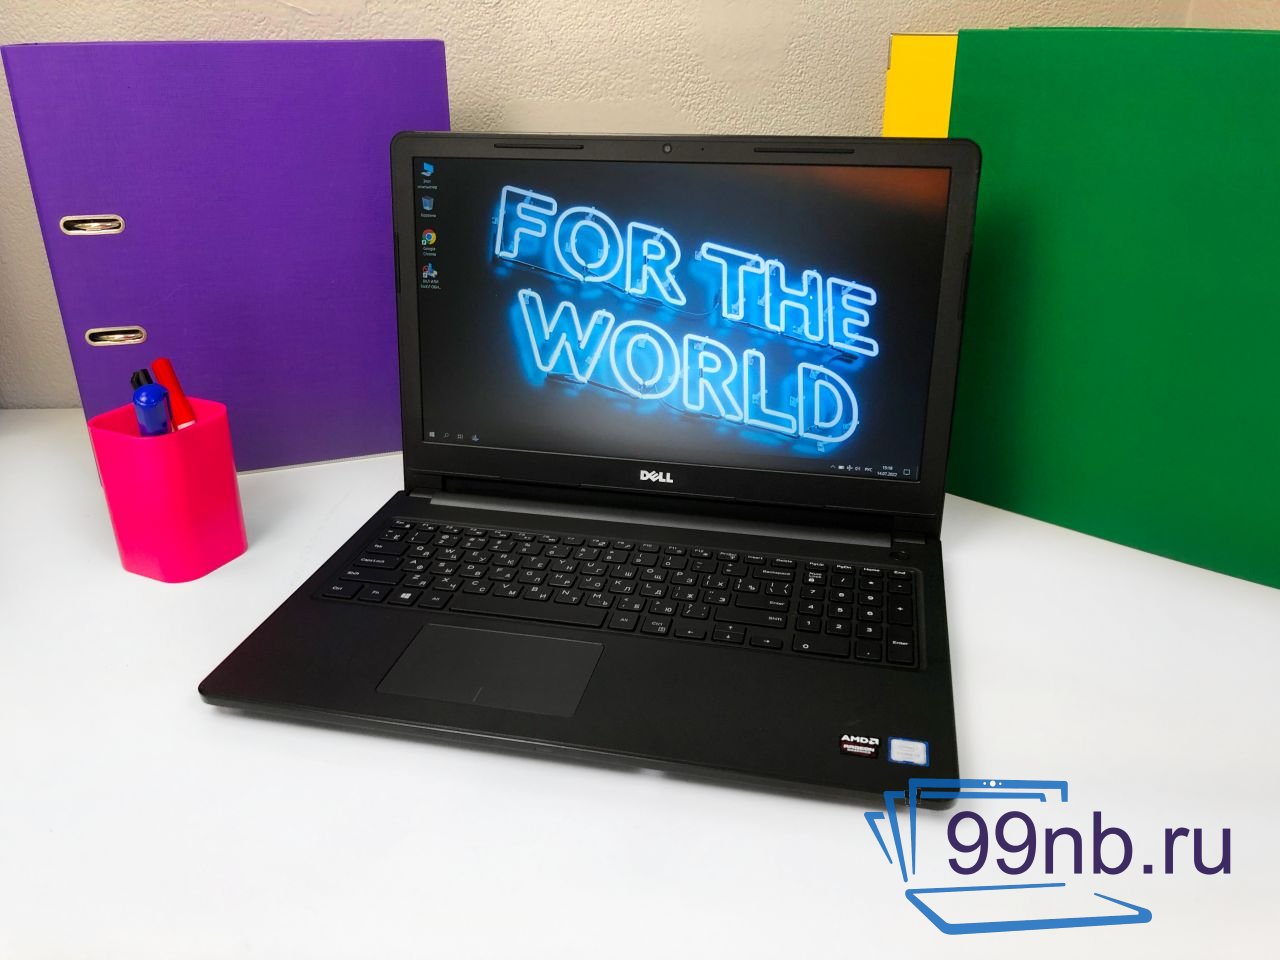  Ноутбук Dell Inspiron для работы в MS Office